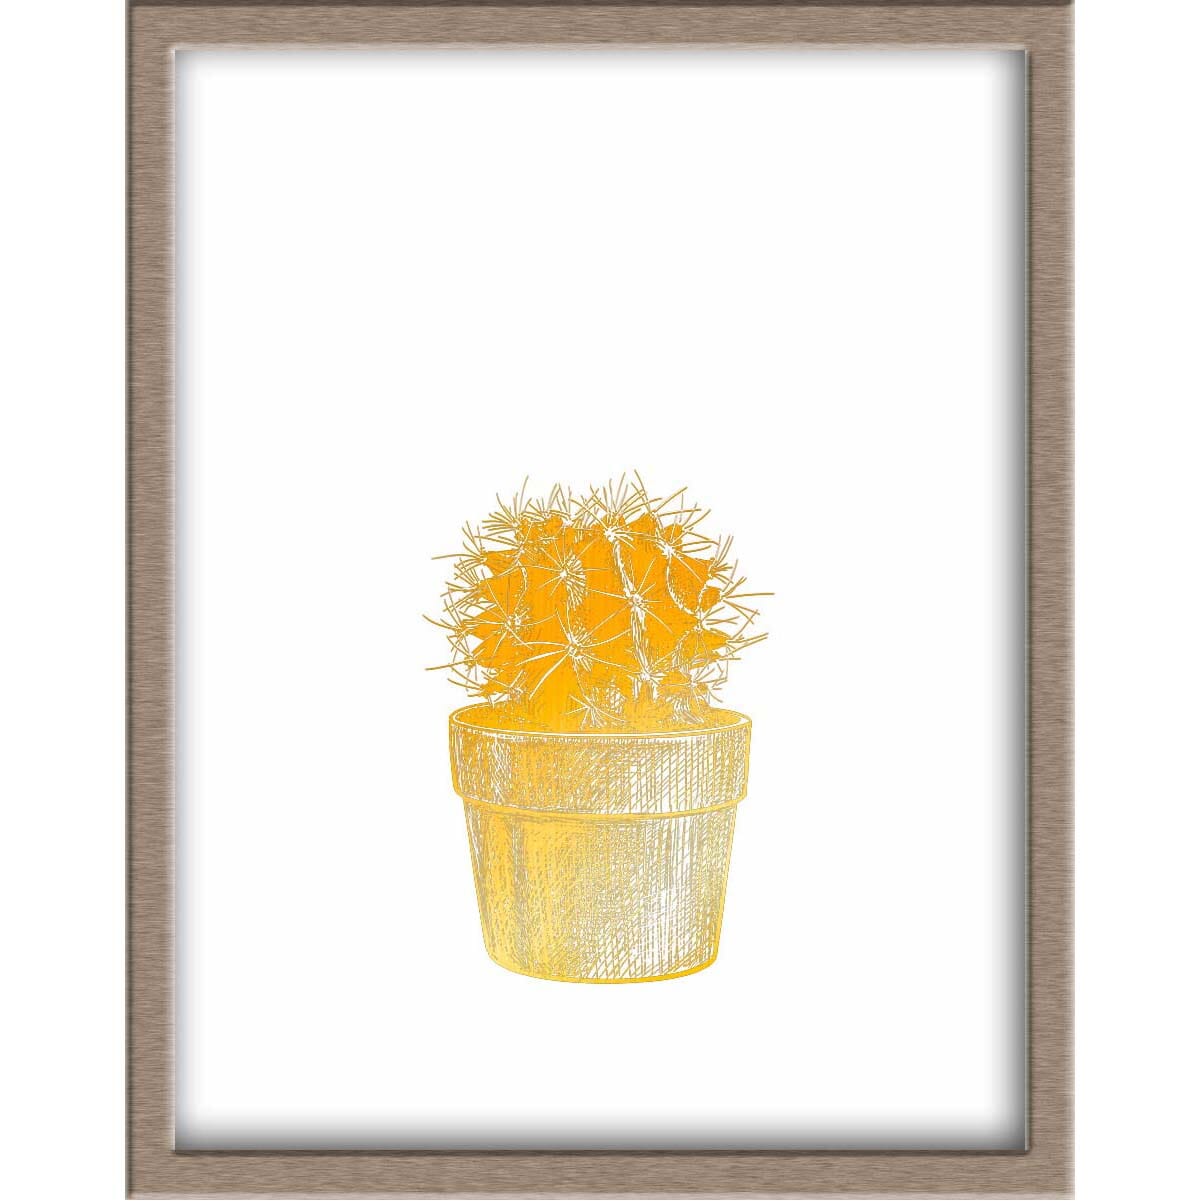 Miniature Potted Ball Cactus Foiled Print Posters, Prints, & Visual Artwork JoyousJoyfulJoyness 